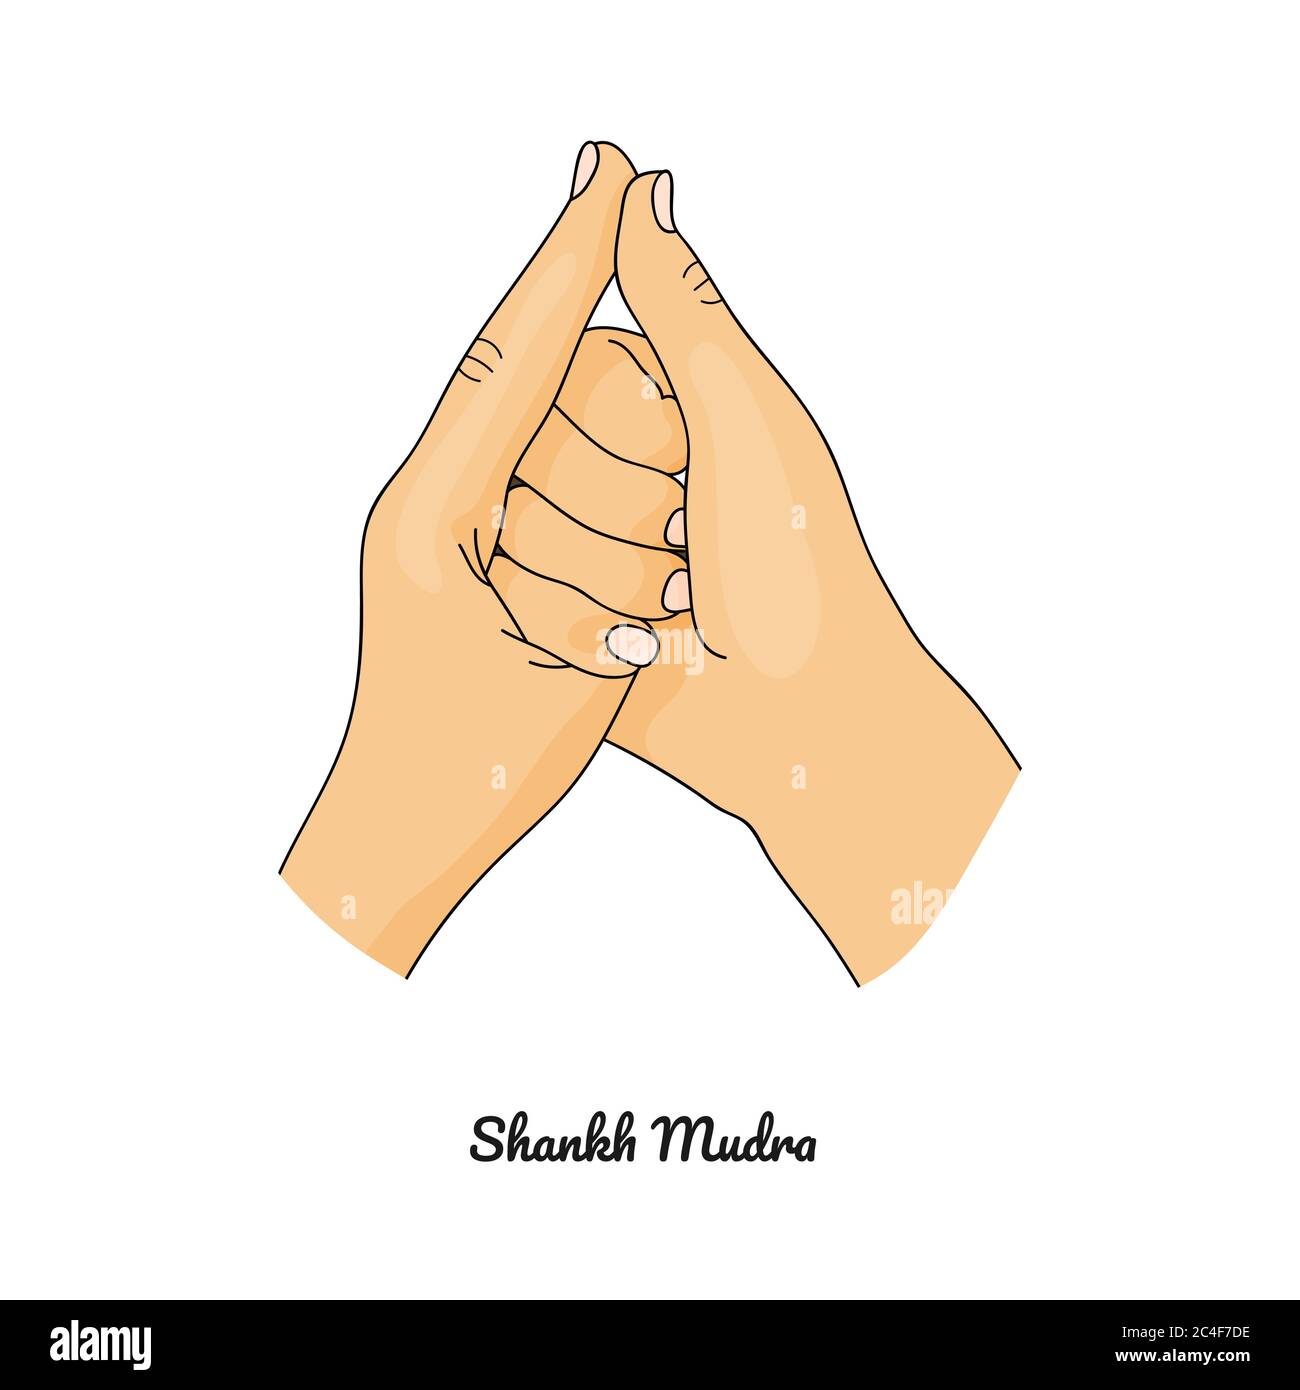 Shankh Mudra / Gesture of Shell. Vettore. Illustrazione Vettoriale